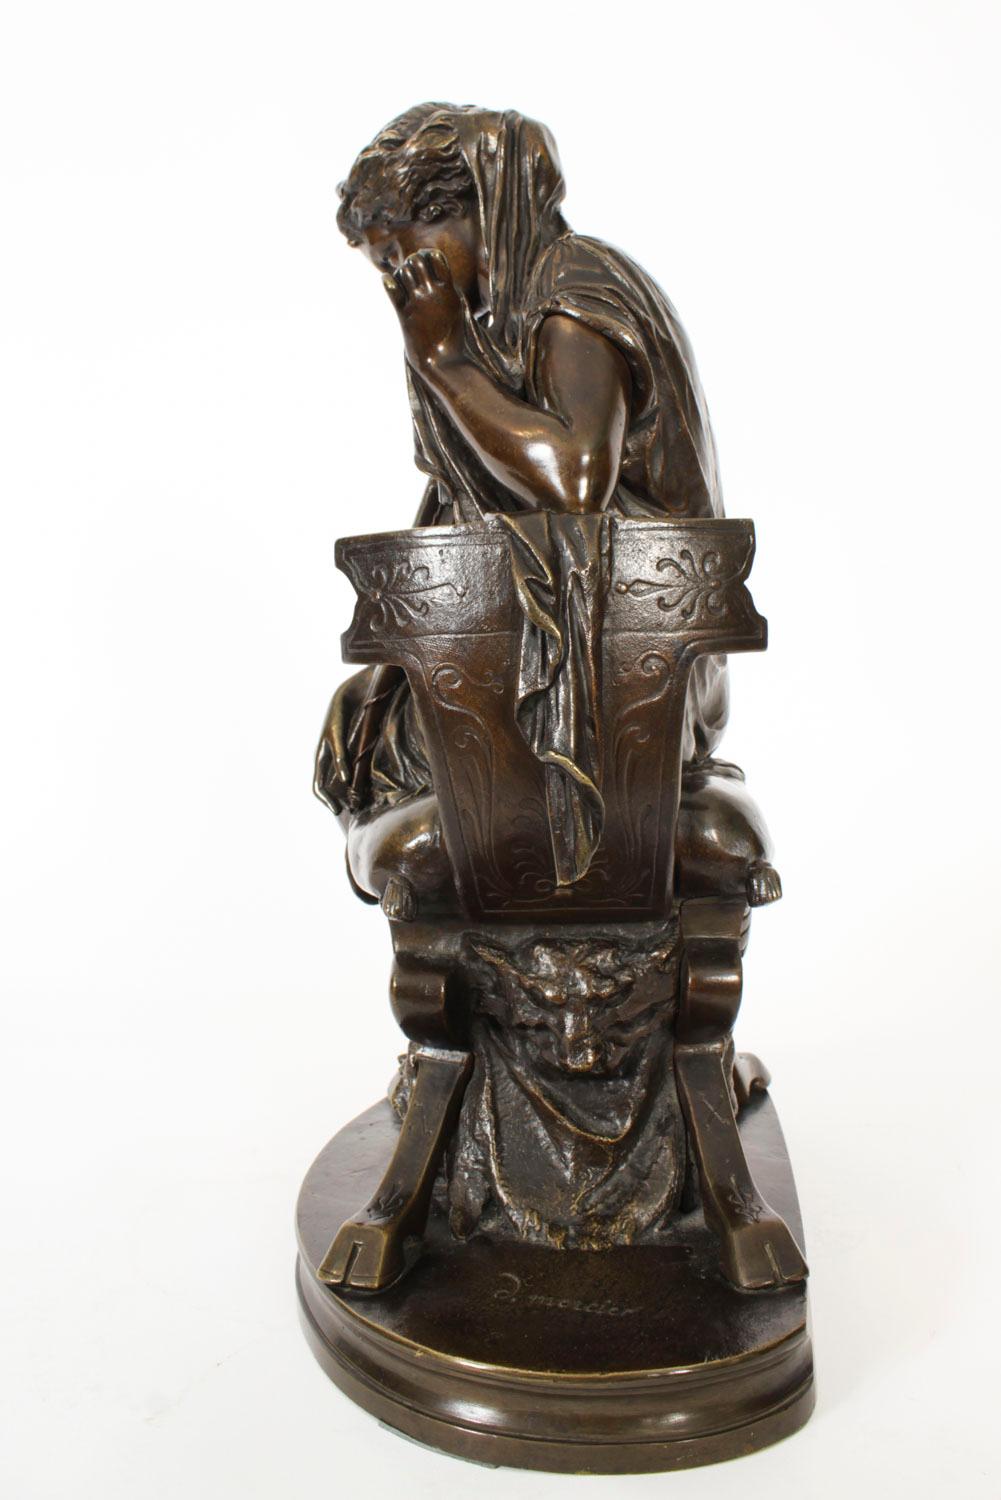 Antique Grand Tour Bronze Sculpture of Goddess Diana by Mercié 19th Century For Sale 9